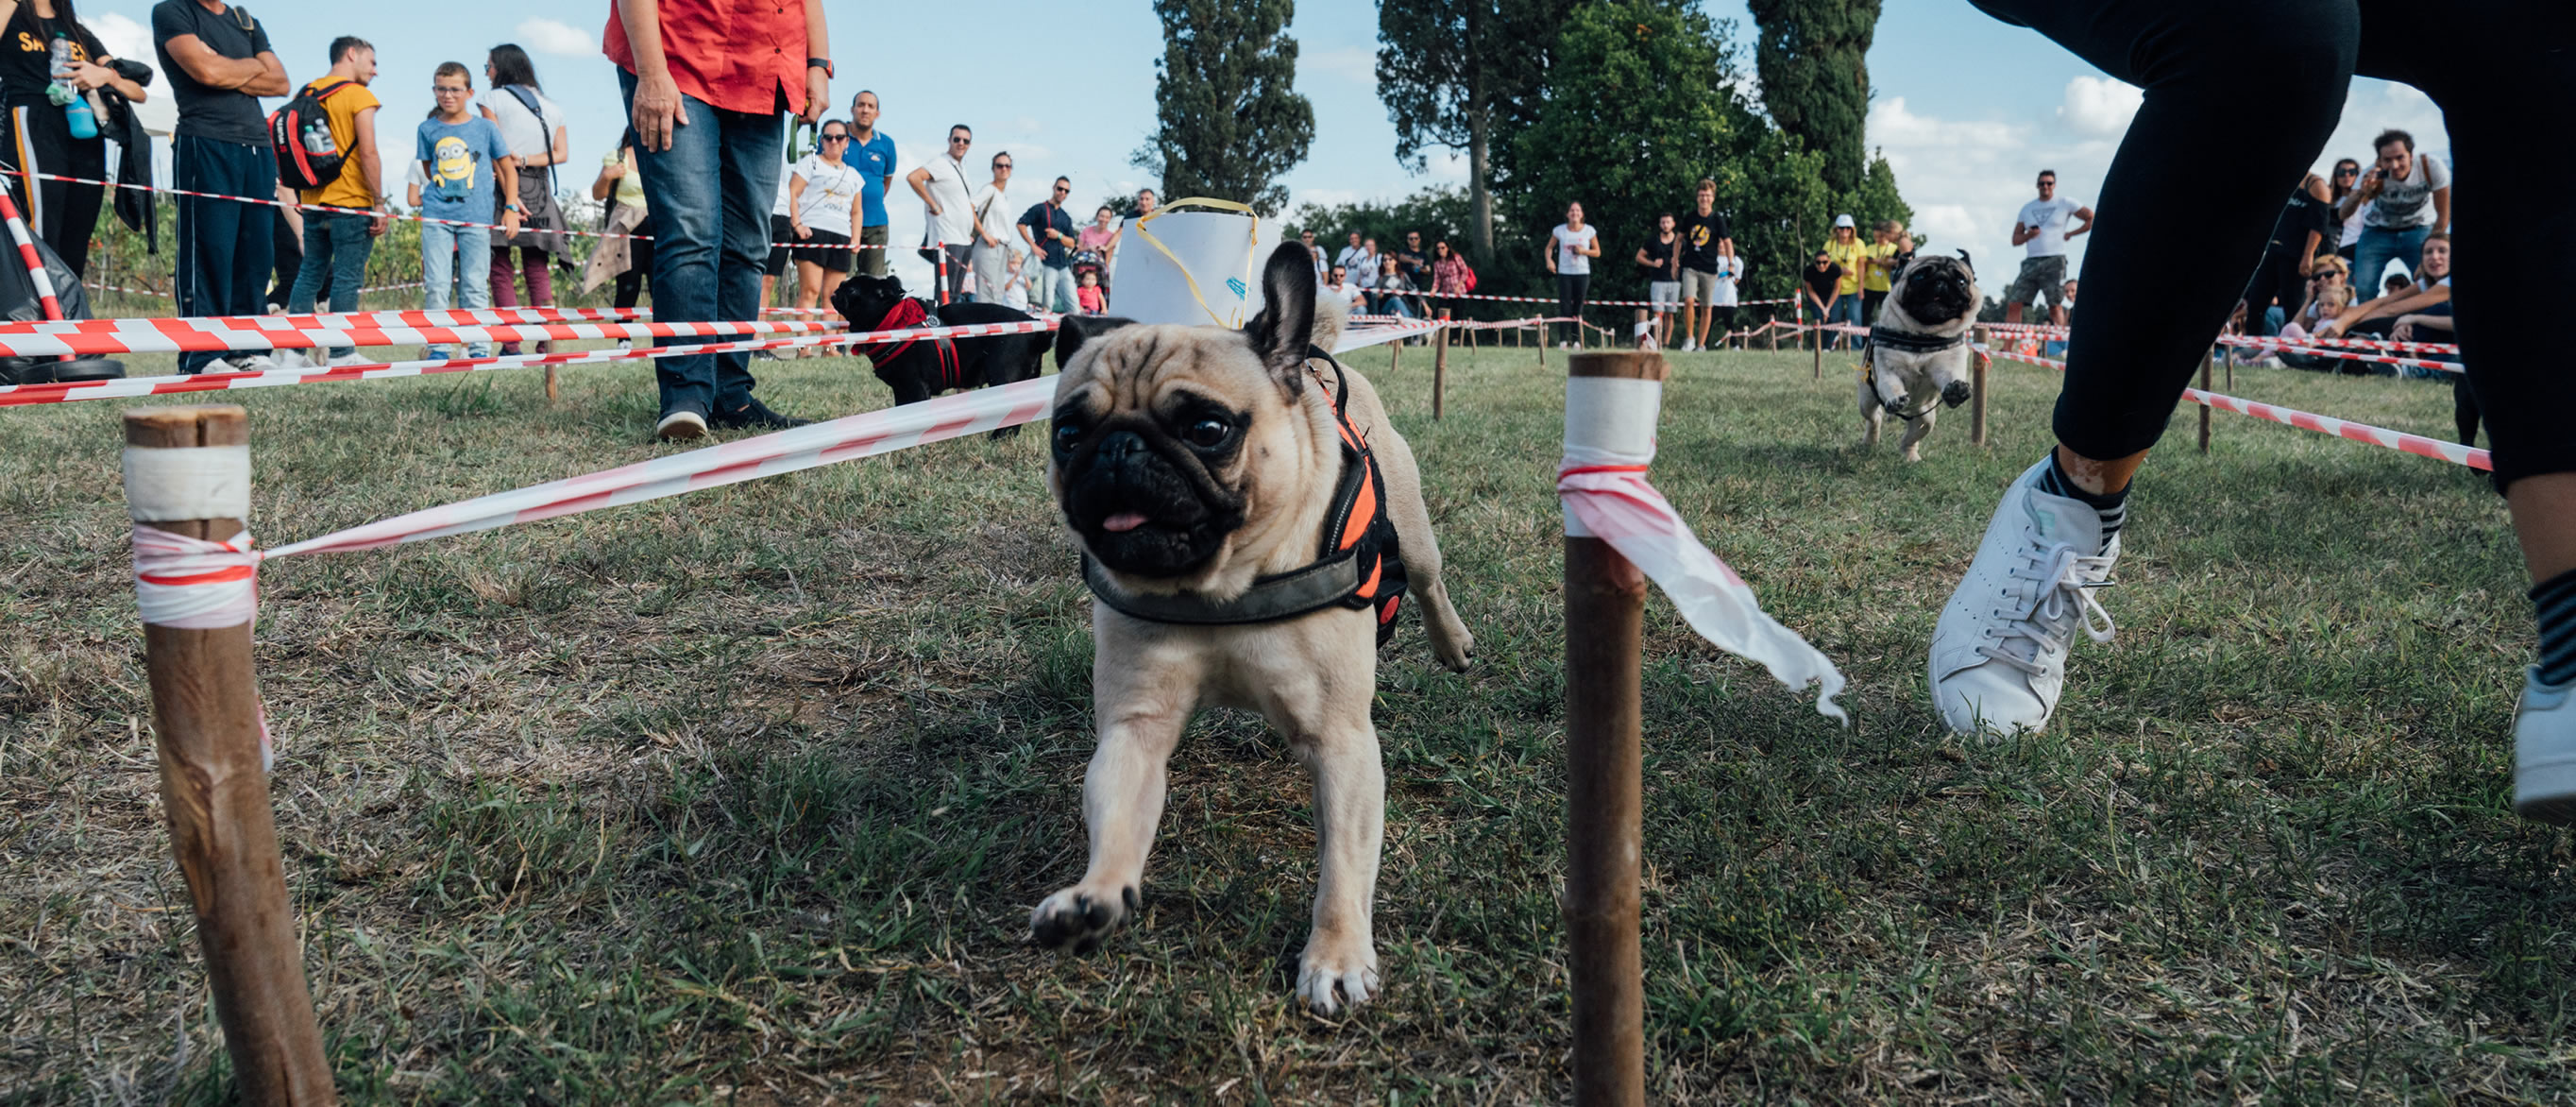 Ugopiadi 2019 - Le Olimpiadi del cane carlino